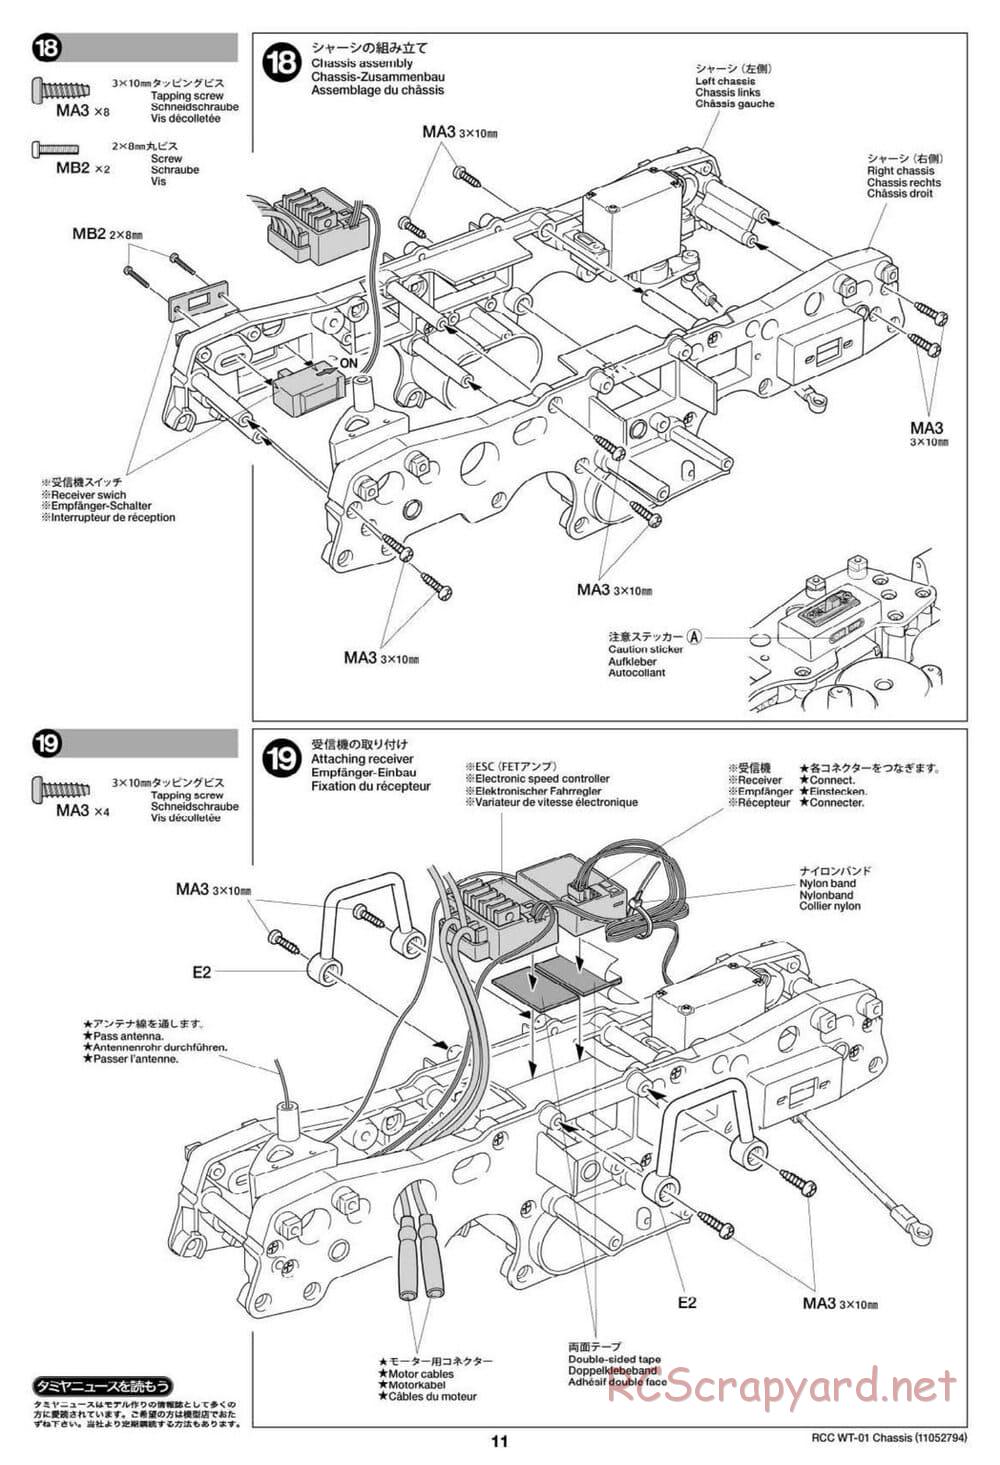 Tamiya - Mud Blaster II - WT-01 Chassis - Manual - Page 11